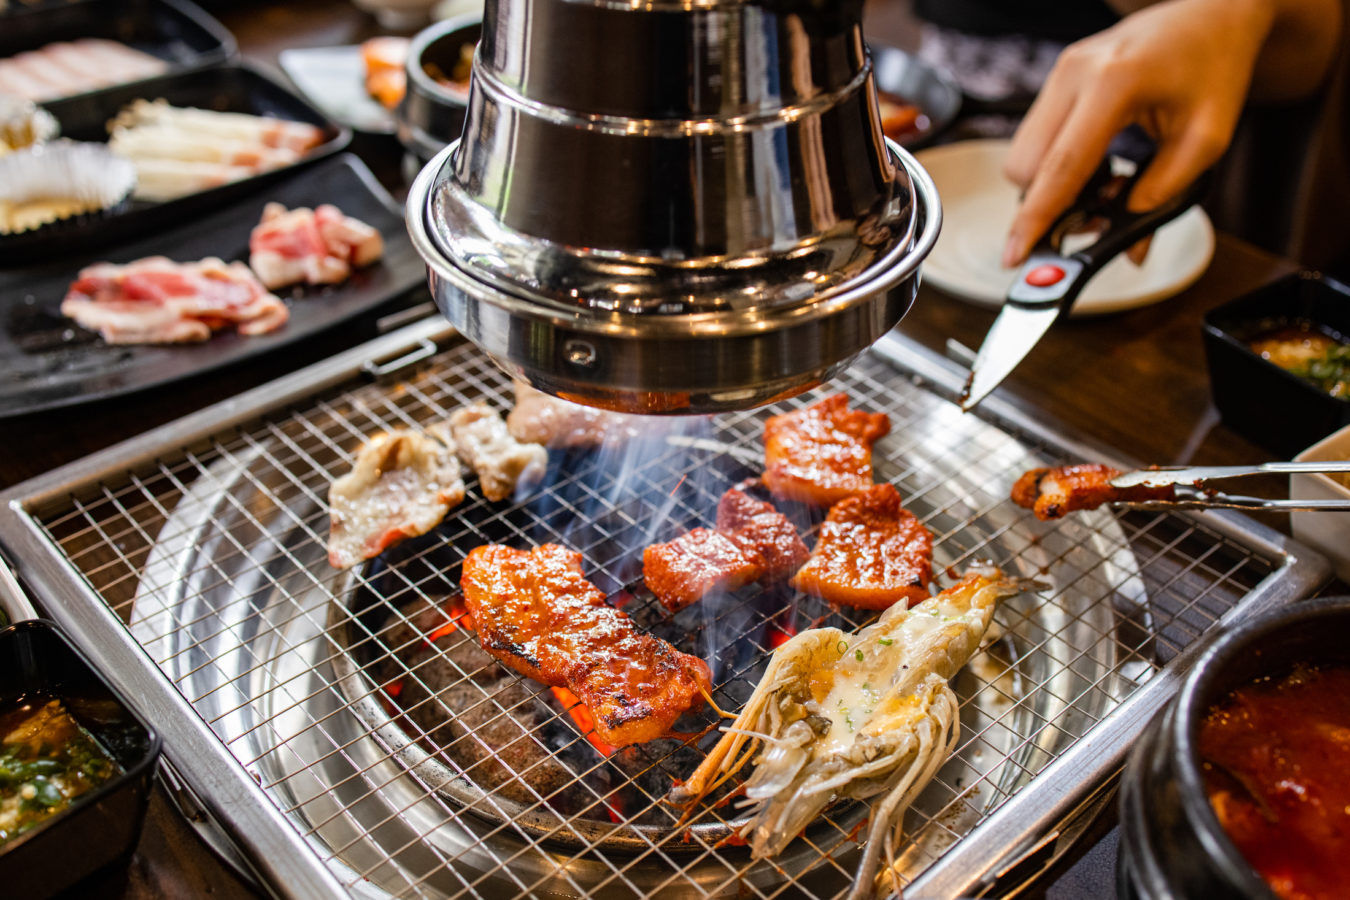 The best Korean BBQ restaurants in Singapore for K-BBQ feasts